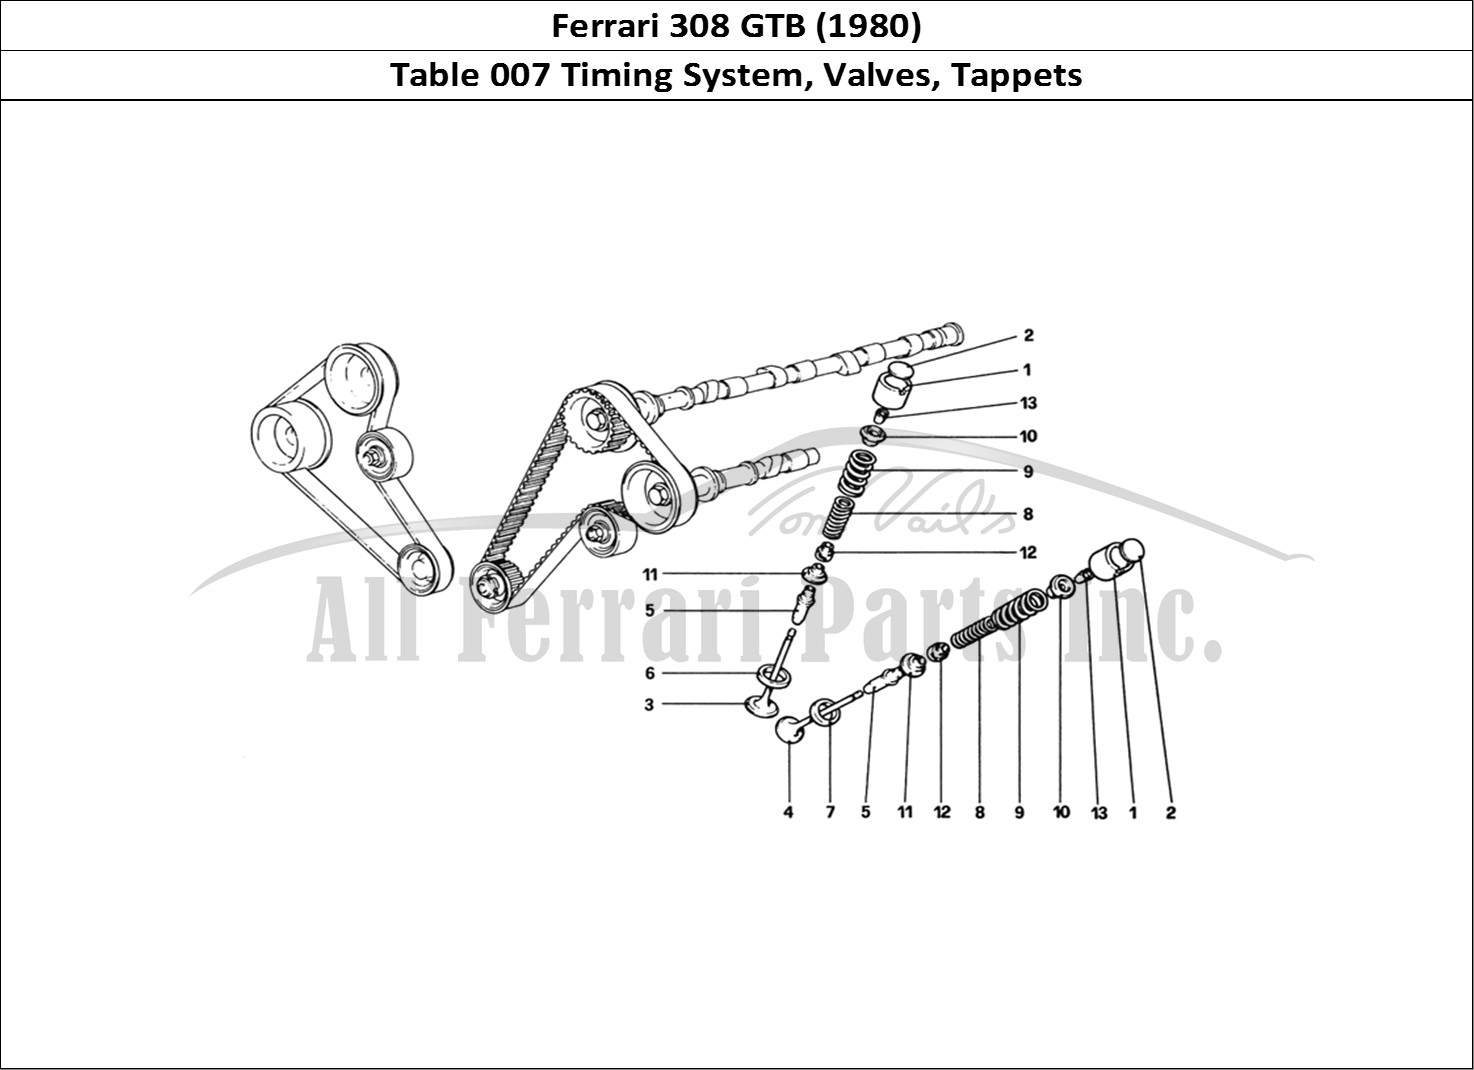 Ferrari Parts Ferrari 308 GTB (1980) Page 007 Timing System - Tappets